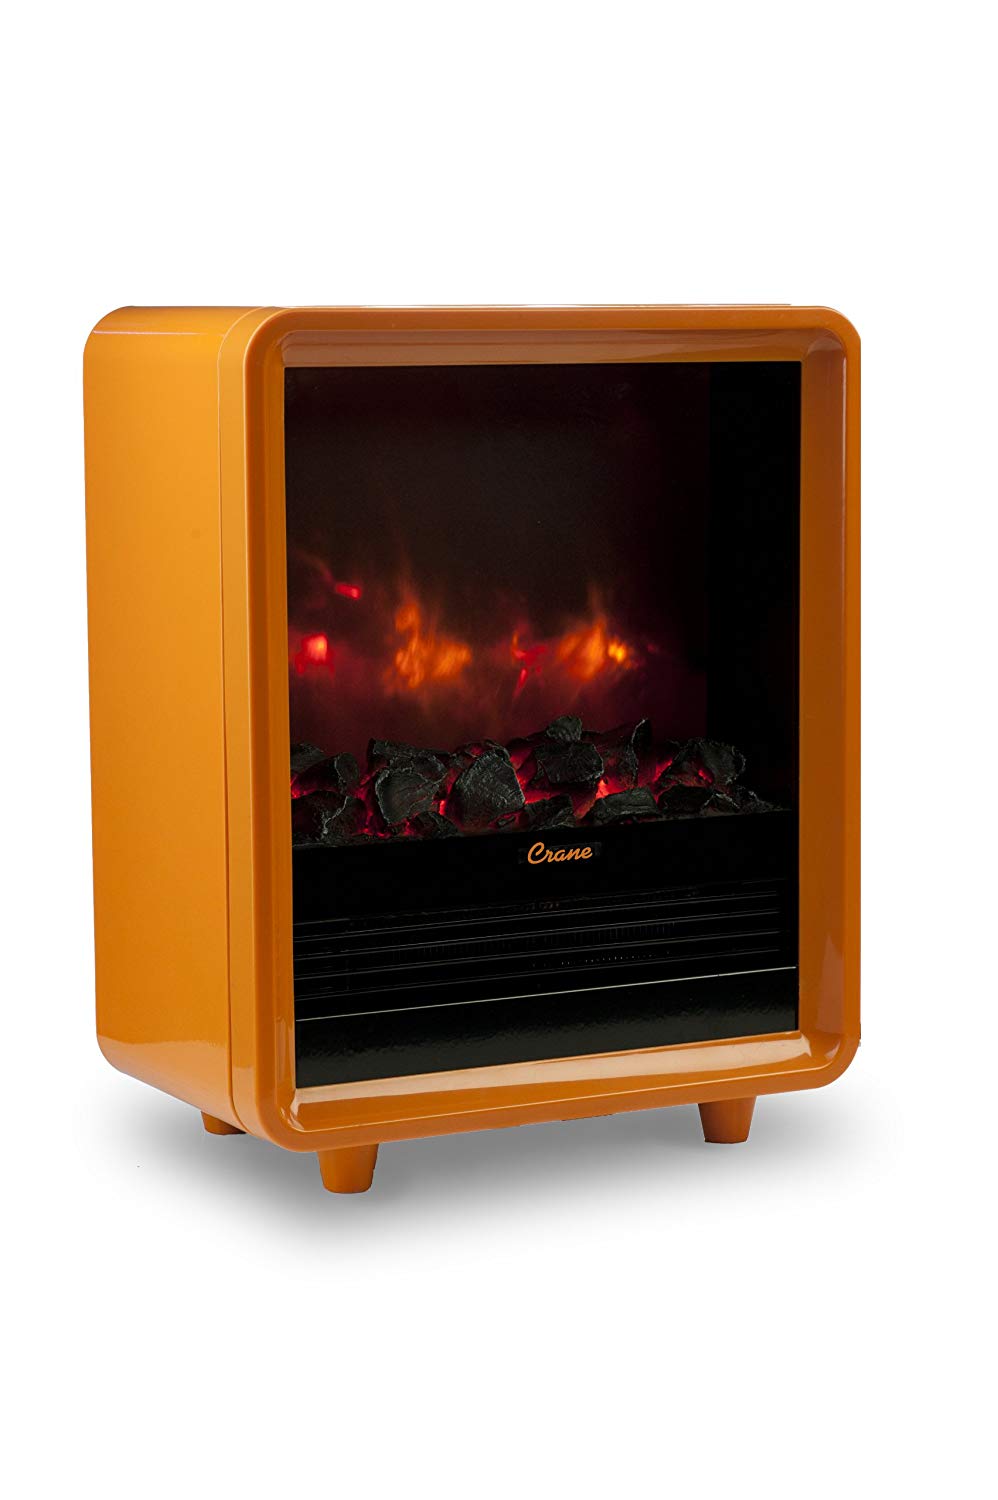 Heat Surge Amish Fireplace Best Of Crane Usa Mini Fireplace Heater orange Amazon Home